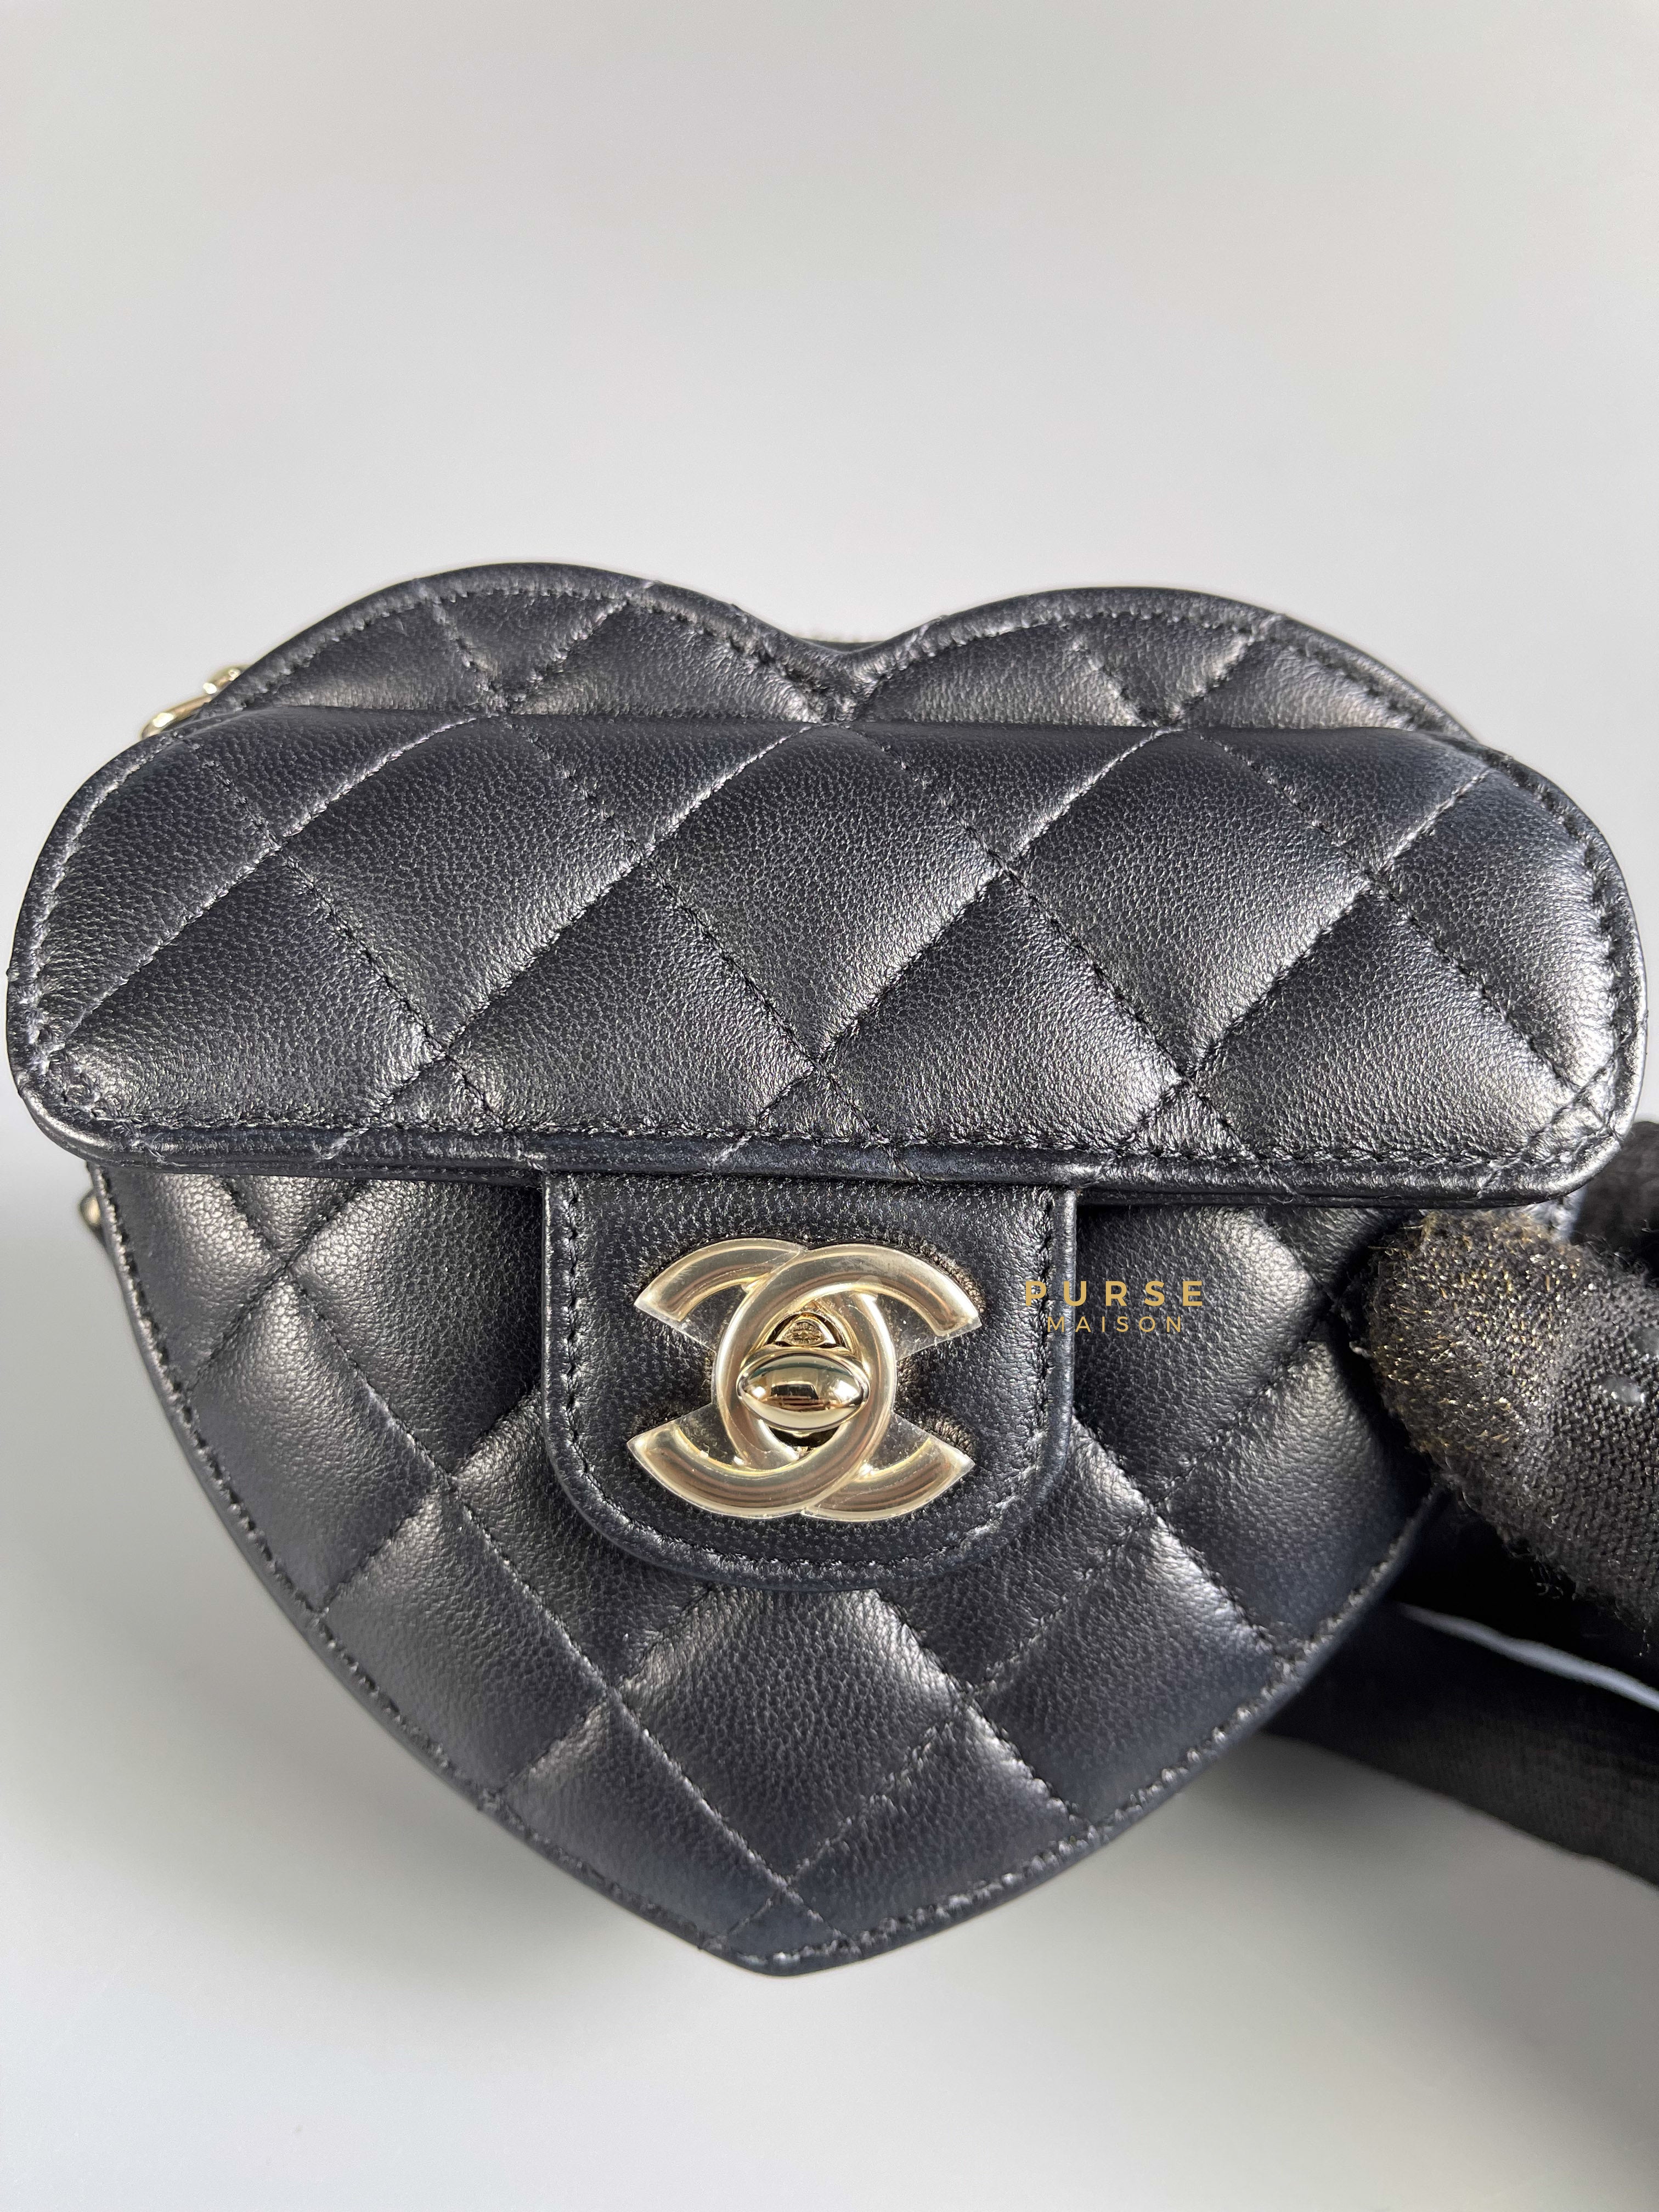 Chanel 22s Small Heart Clutch Bag in Black Lambskin Gold Hardware Series 32 | Purse Maison Luxury Bags Shop